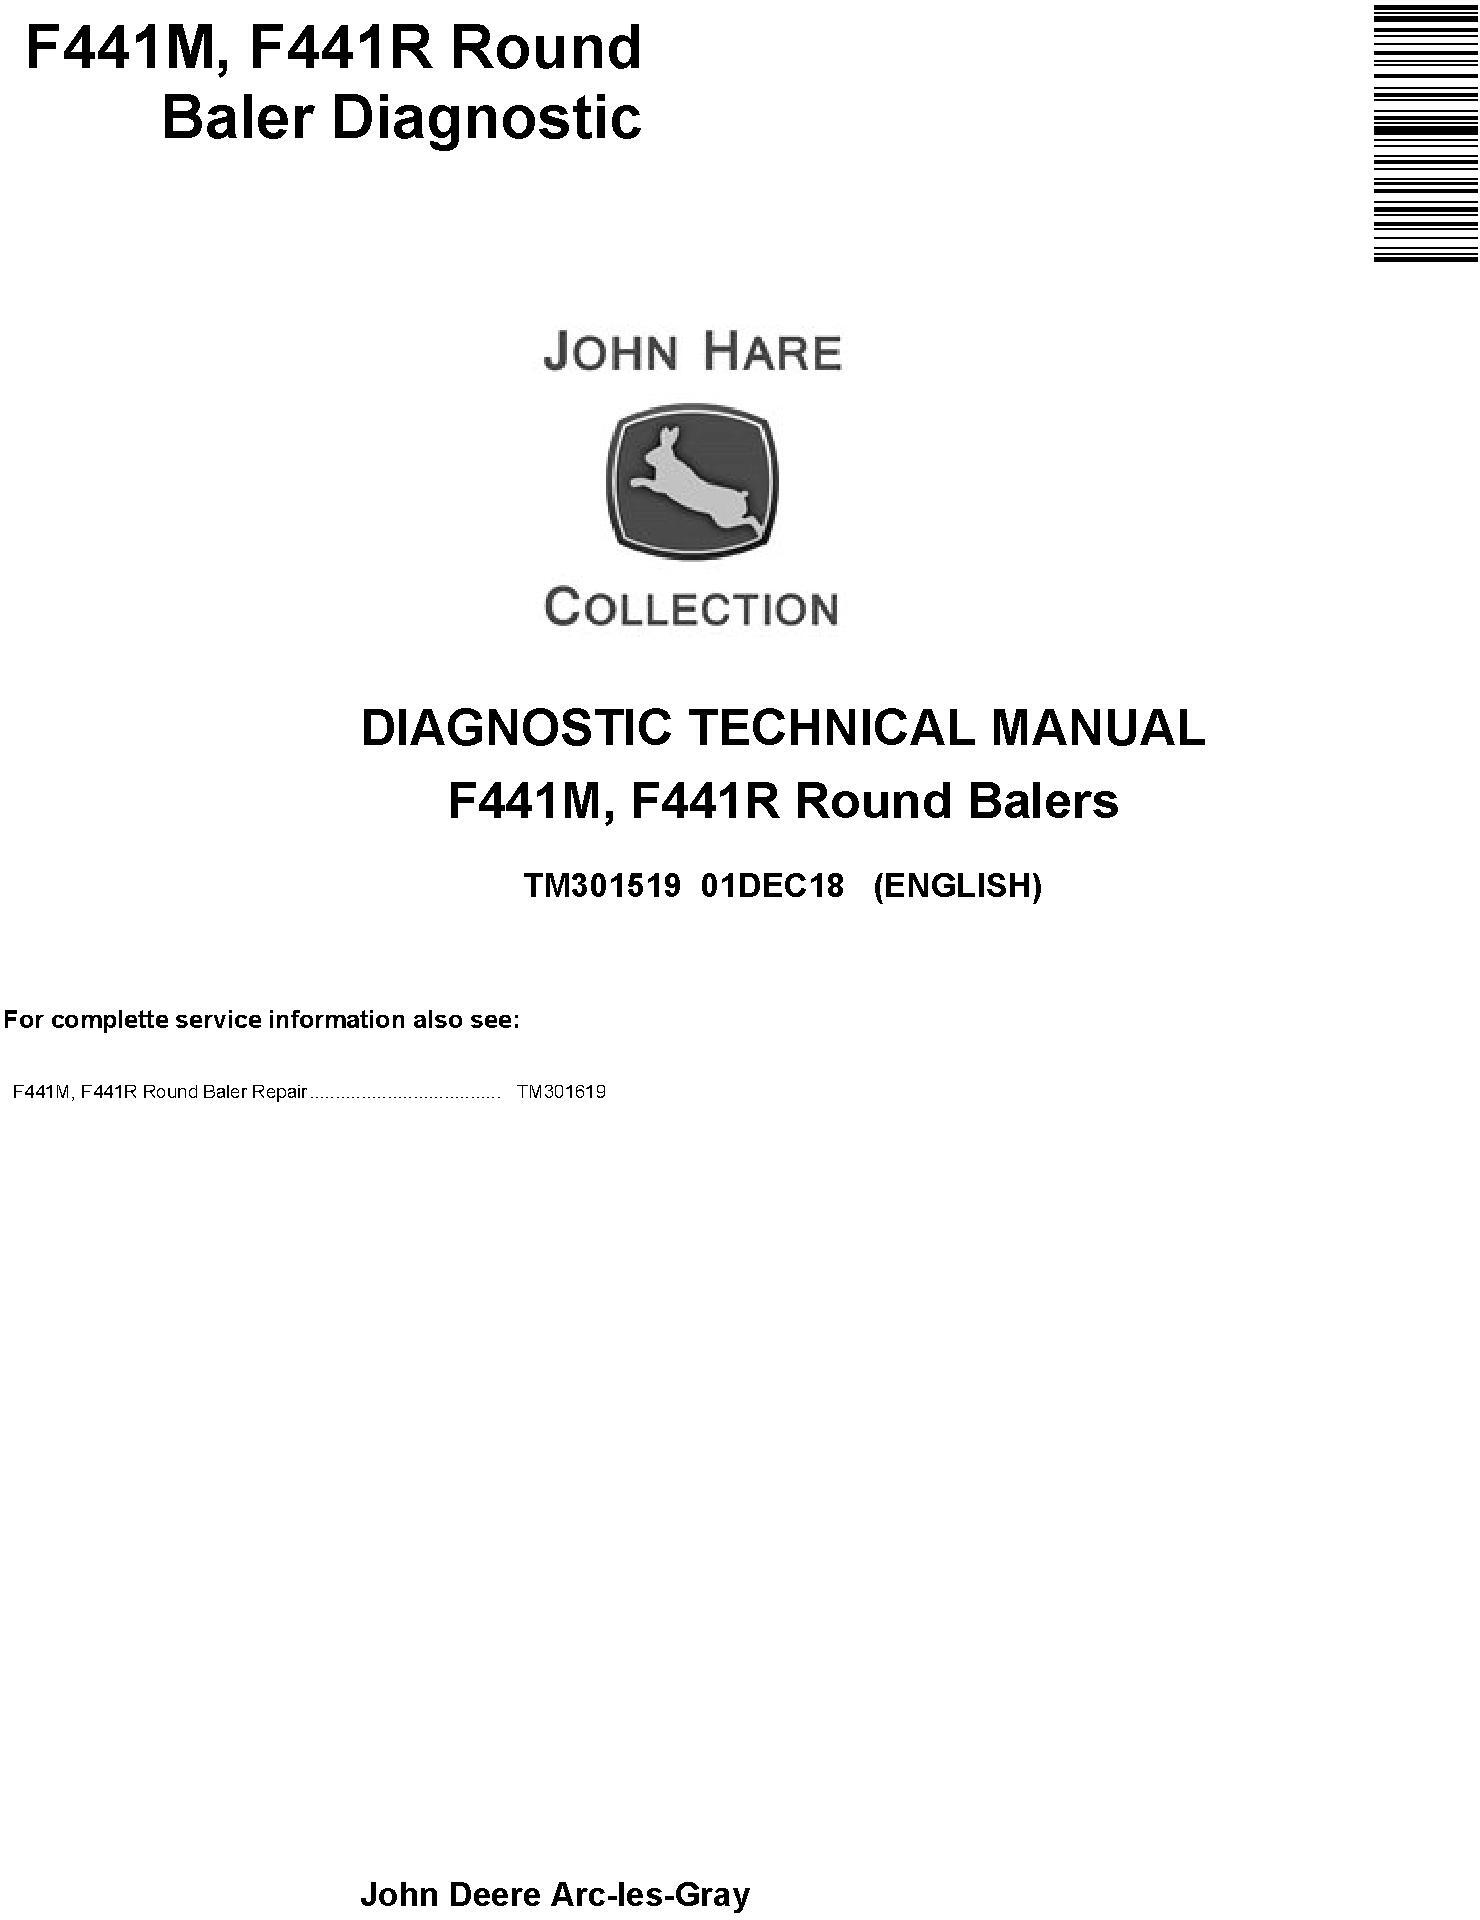 John Deere F441M, F441R Round Balers Diagnostic Technical Service Manual (TM301519) - 19250